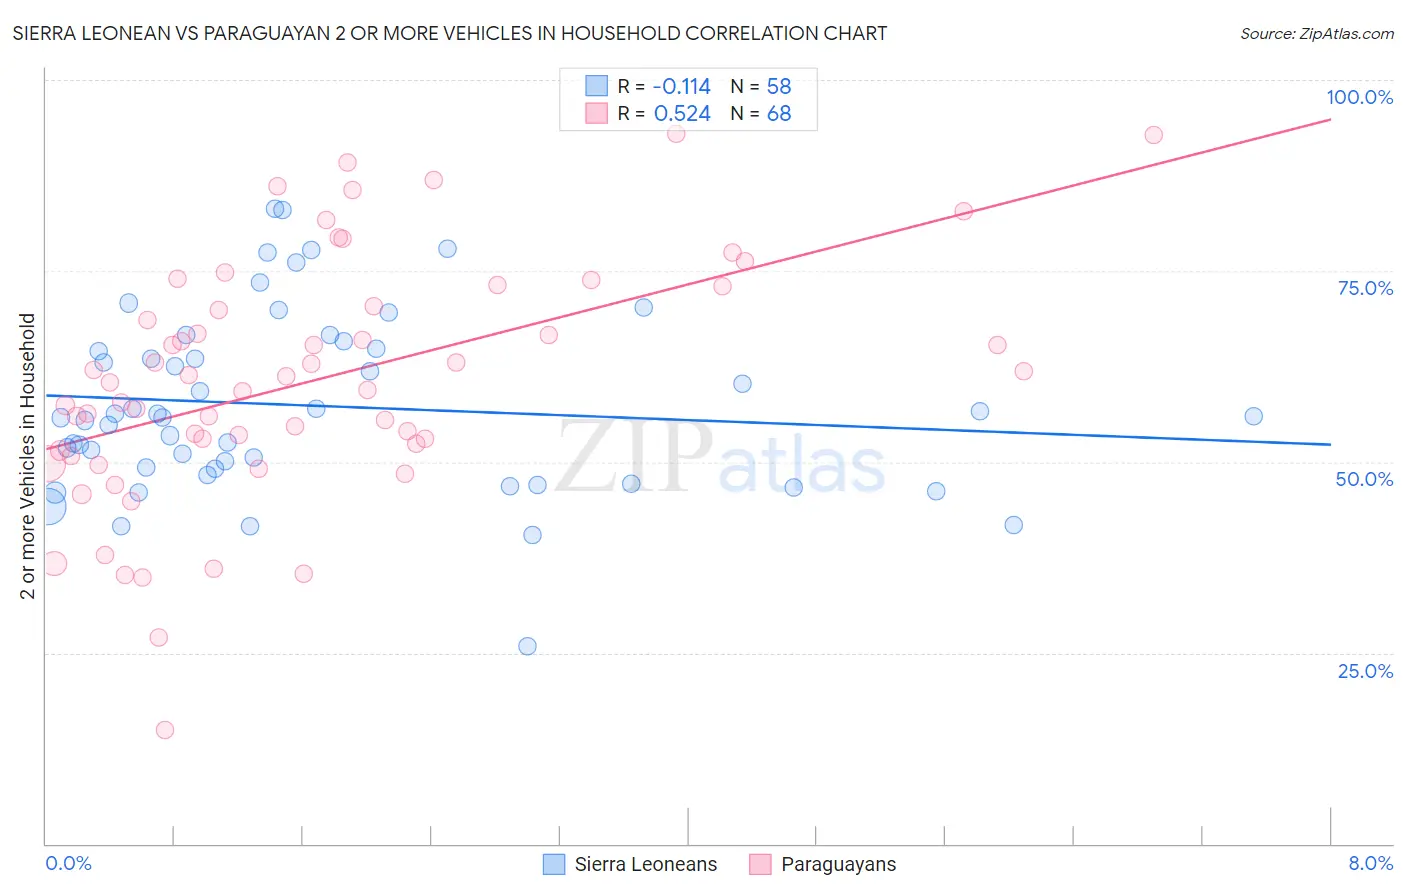 Sierra Leonean vs Paraguayan 2 or more Vehicles in Household